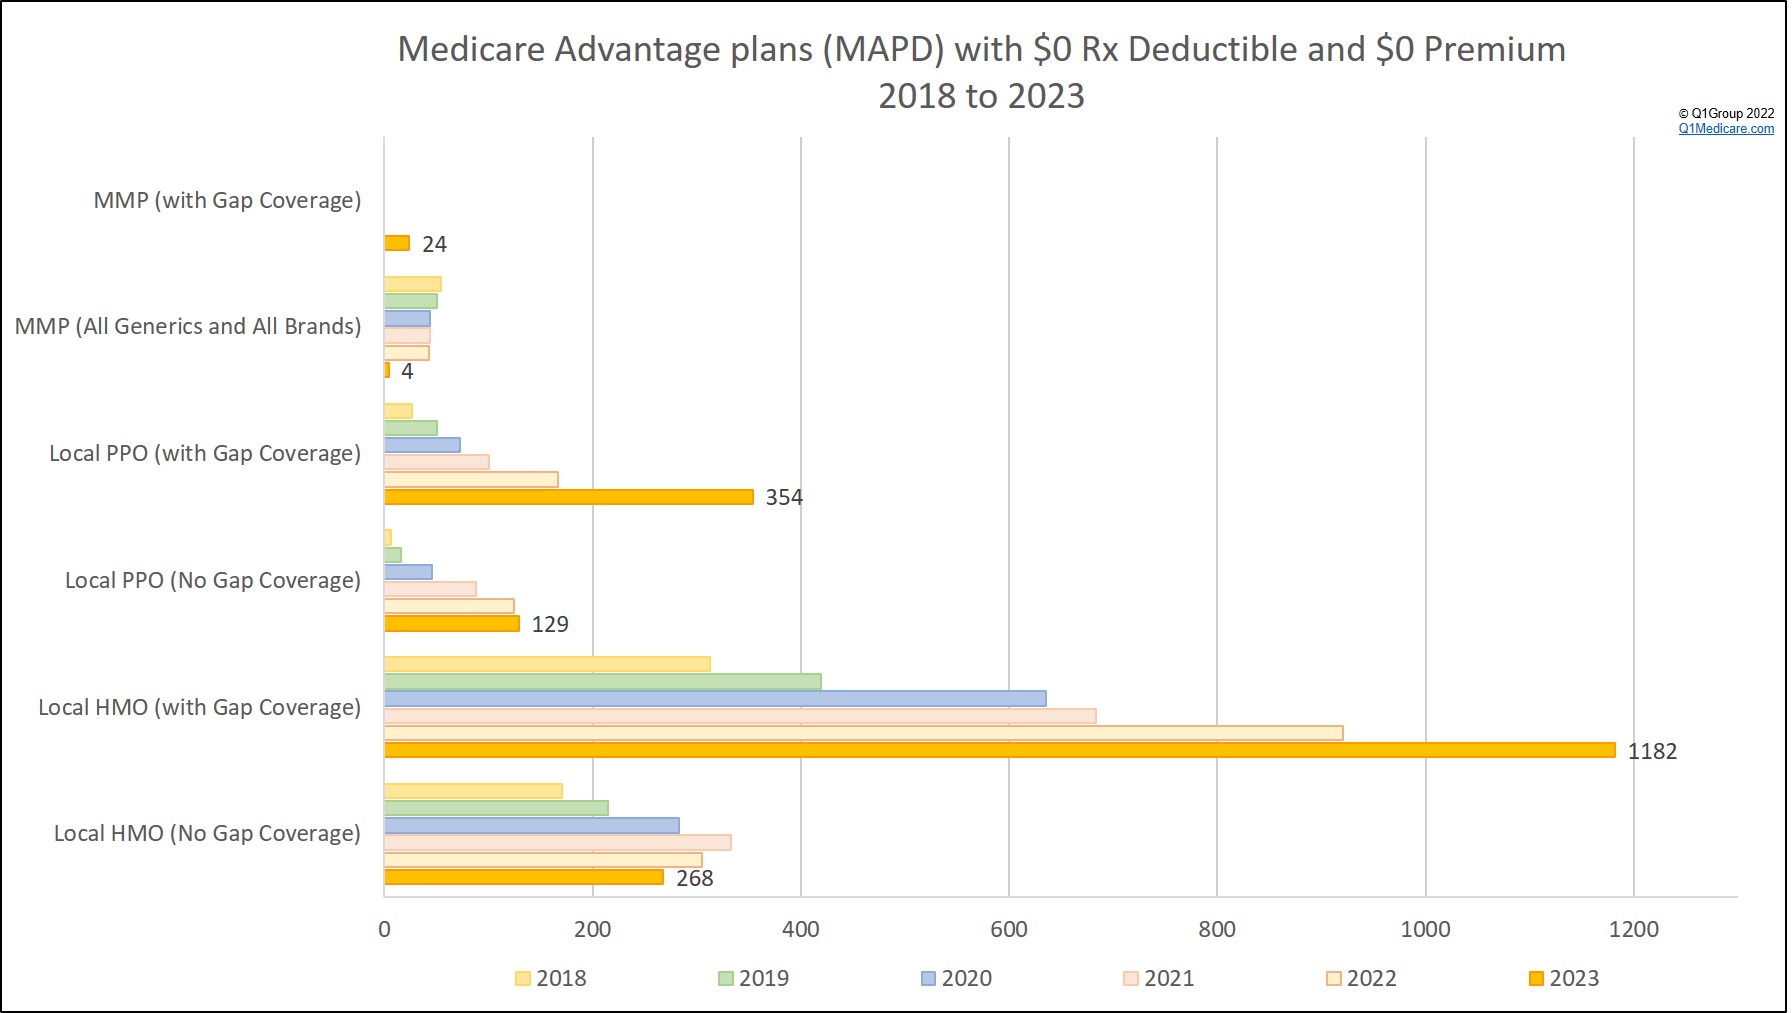 Medicare Advantage MAPD plans with a zero premium and zero drug deductible